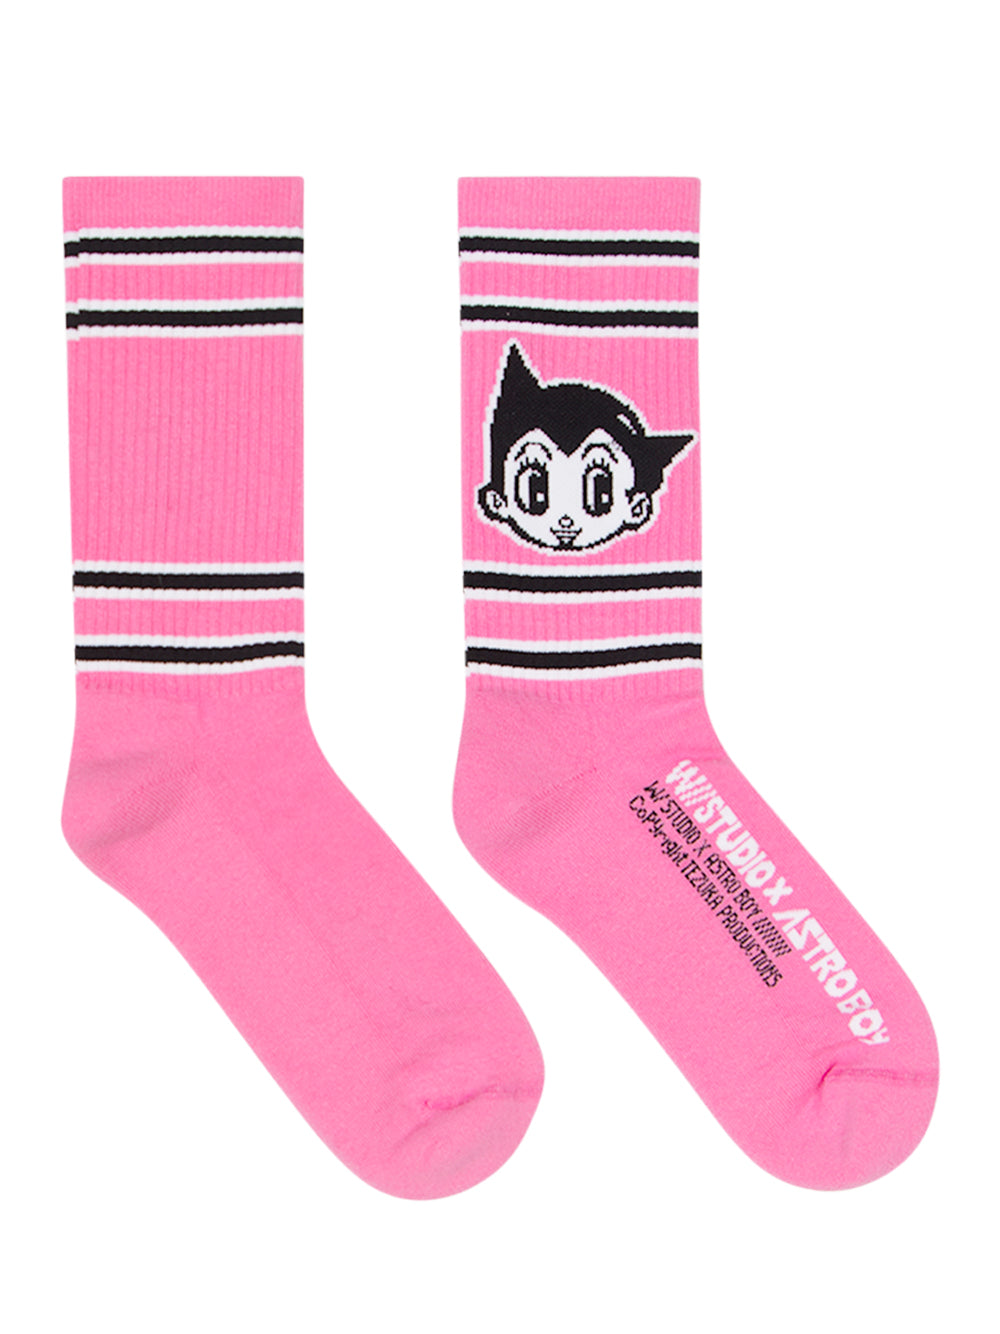 Socks Astro Boy (Pink)